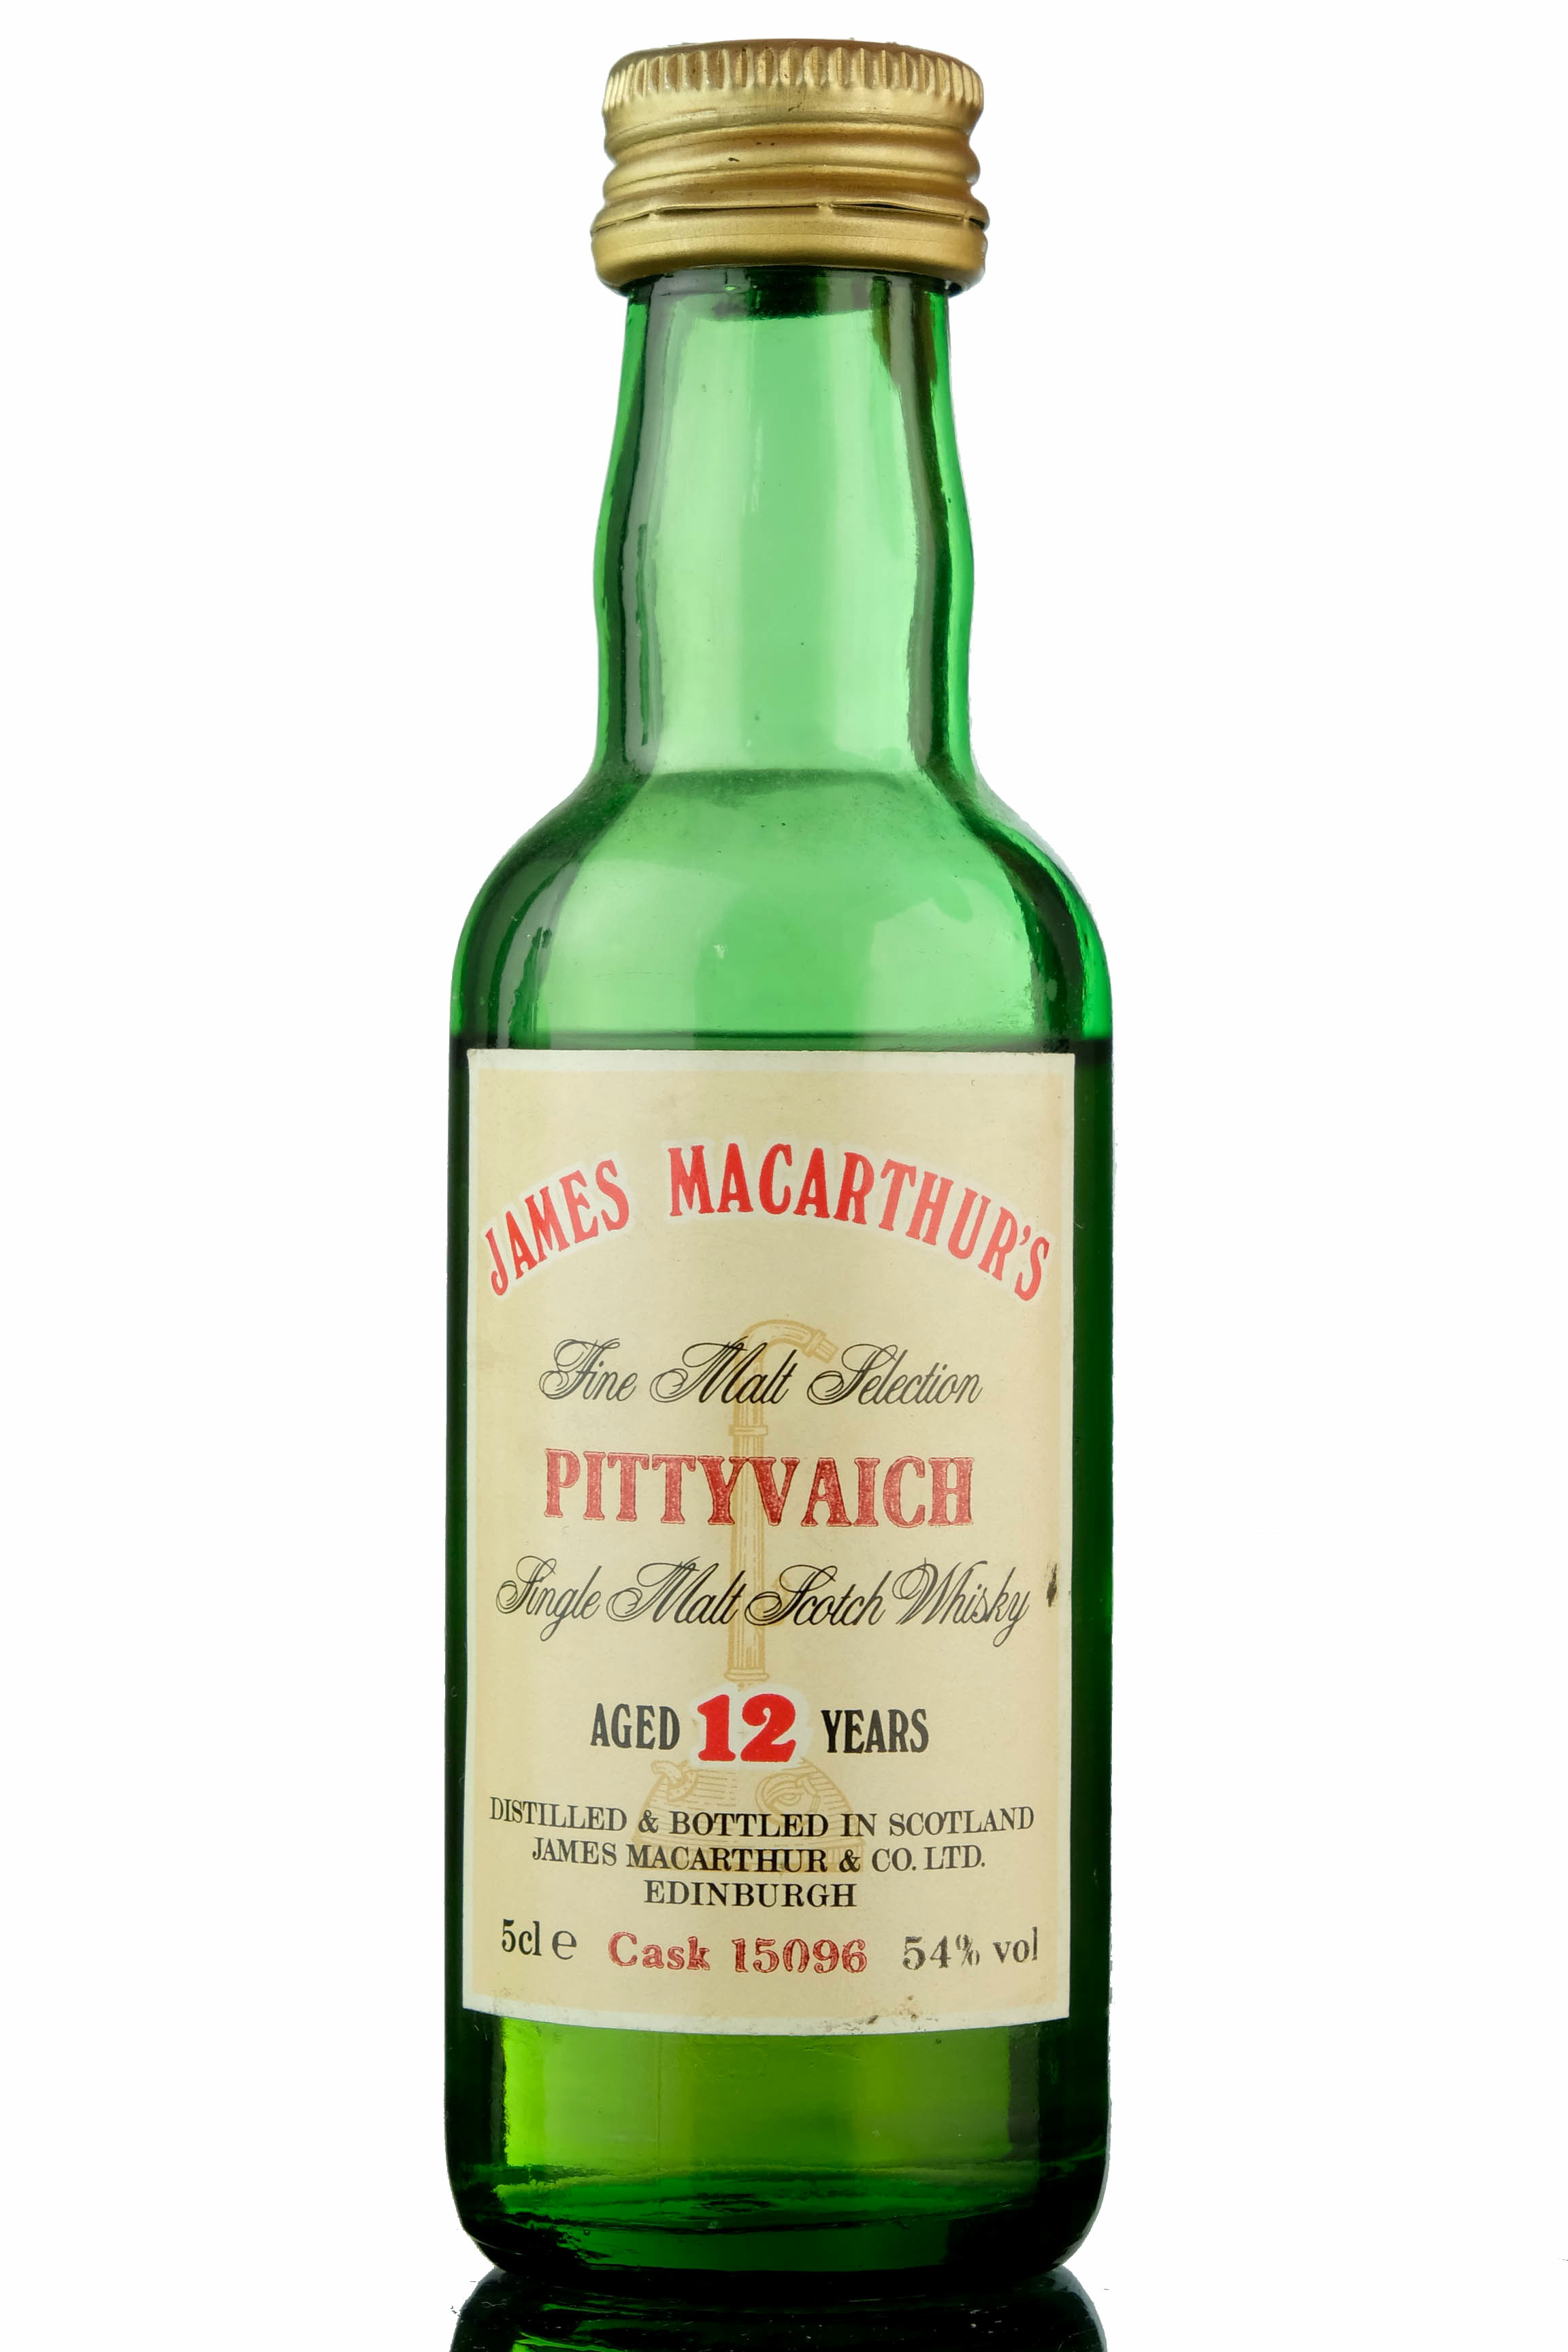 Pittyvaich 12 Year Old - James MacArthur - Fine Malt Selection Miniature